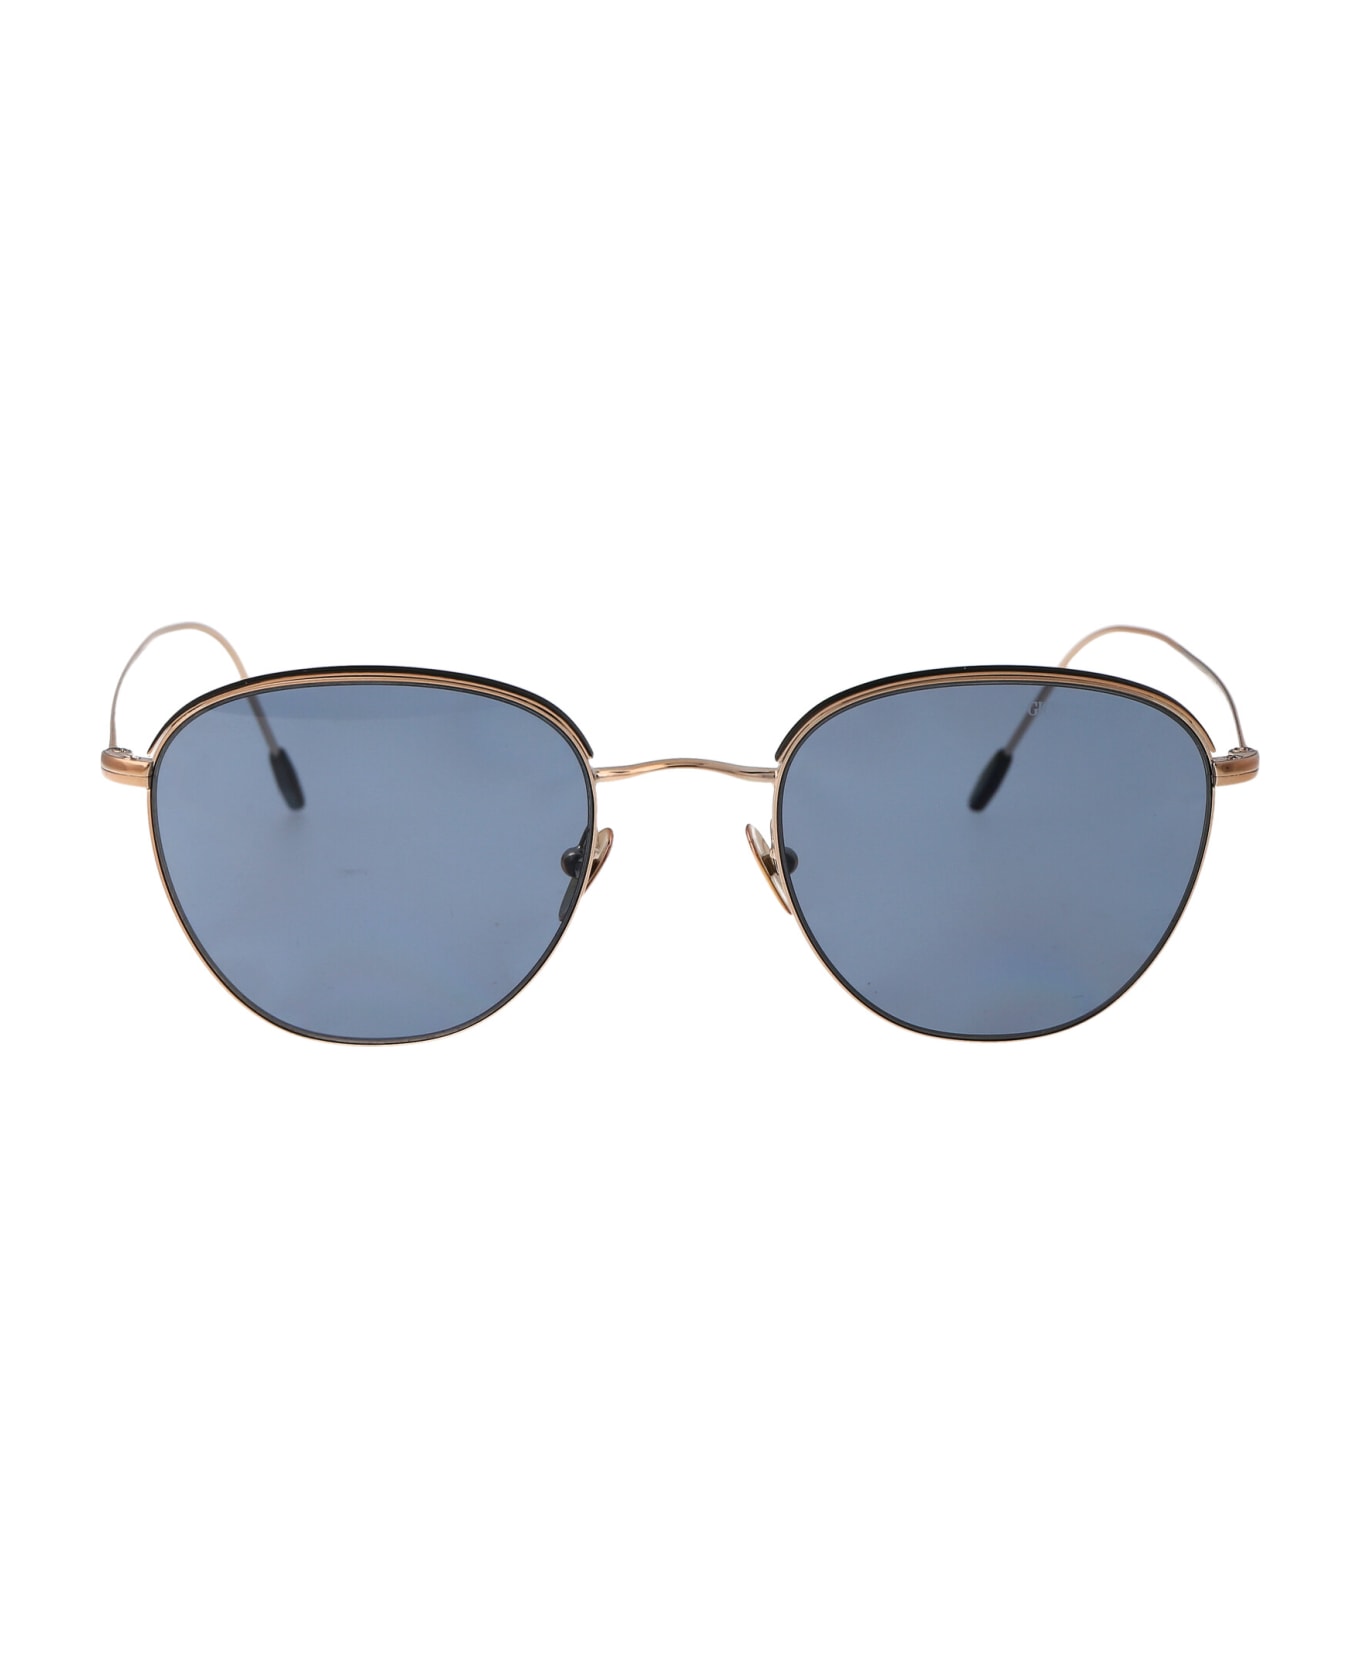 Giorgio Armani 0ar6048 Sunglasses - 302819 Bronze/Black